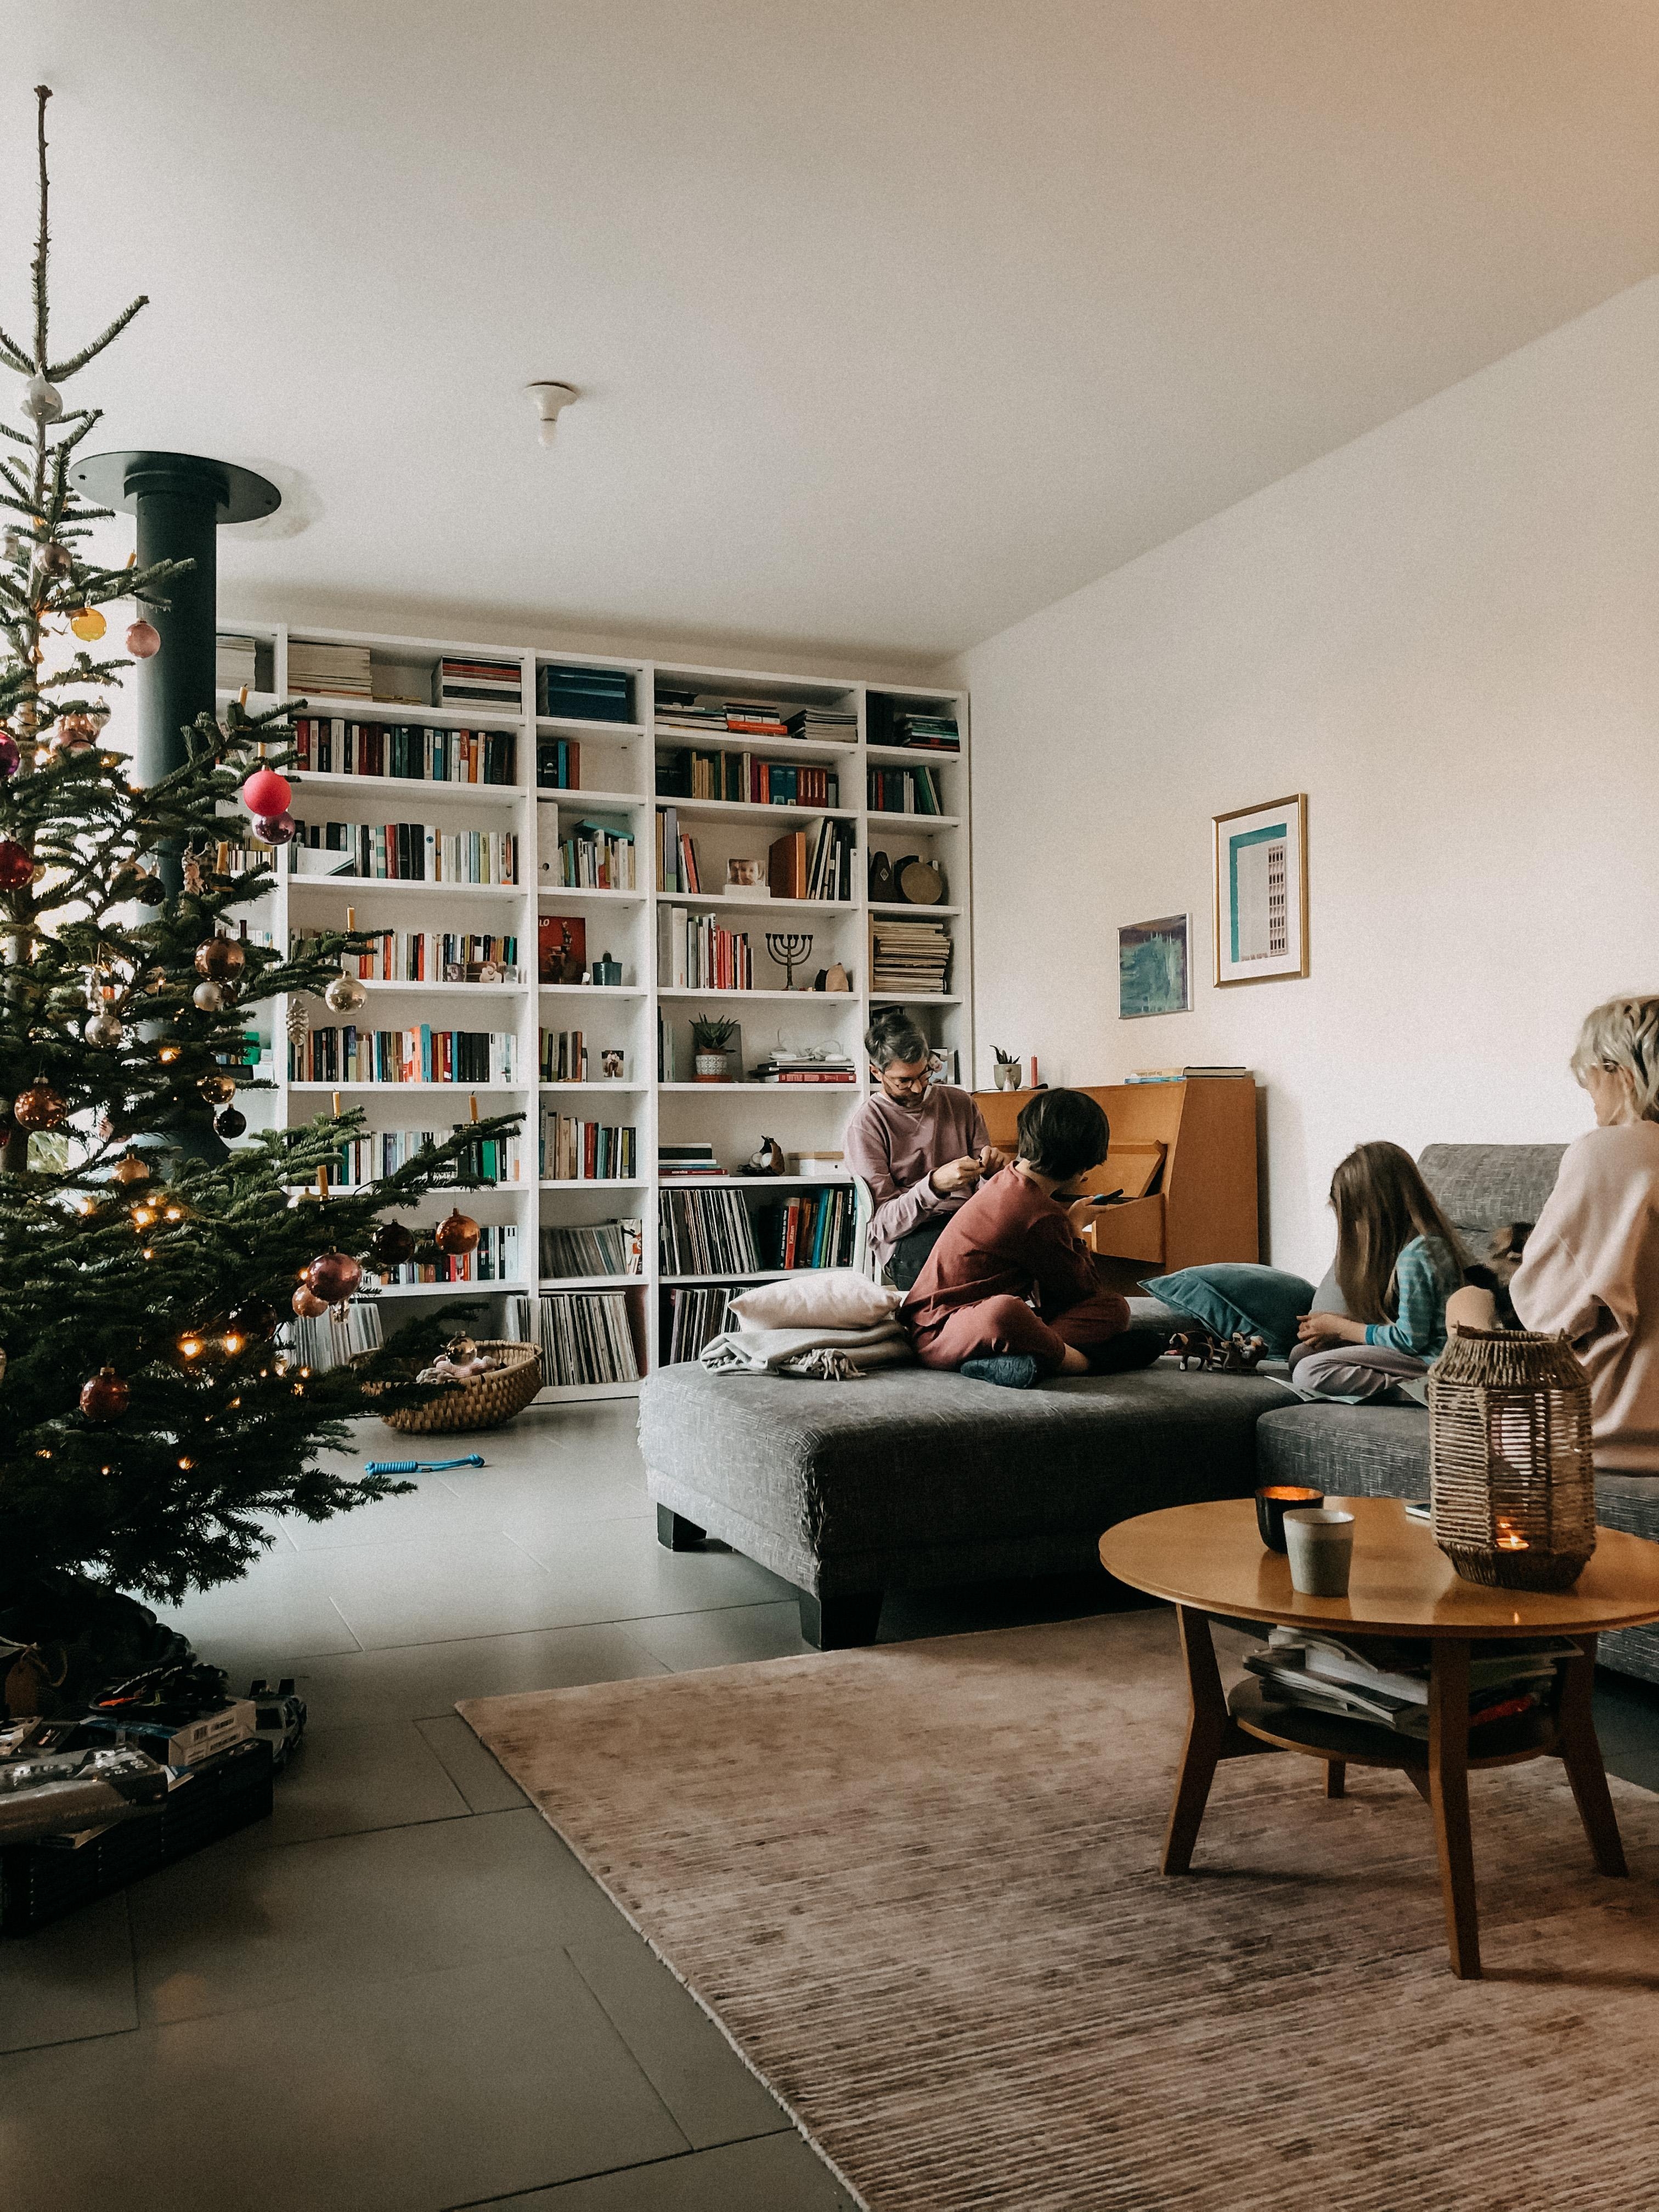 Family First!
#wohnzimmer #christmasfeeling #christmas #family #vibes #kamin #bücherregal 